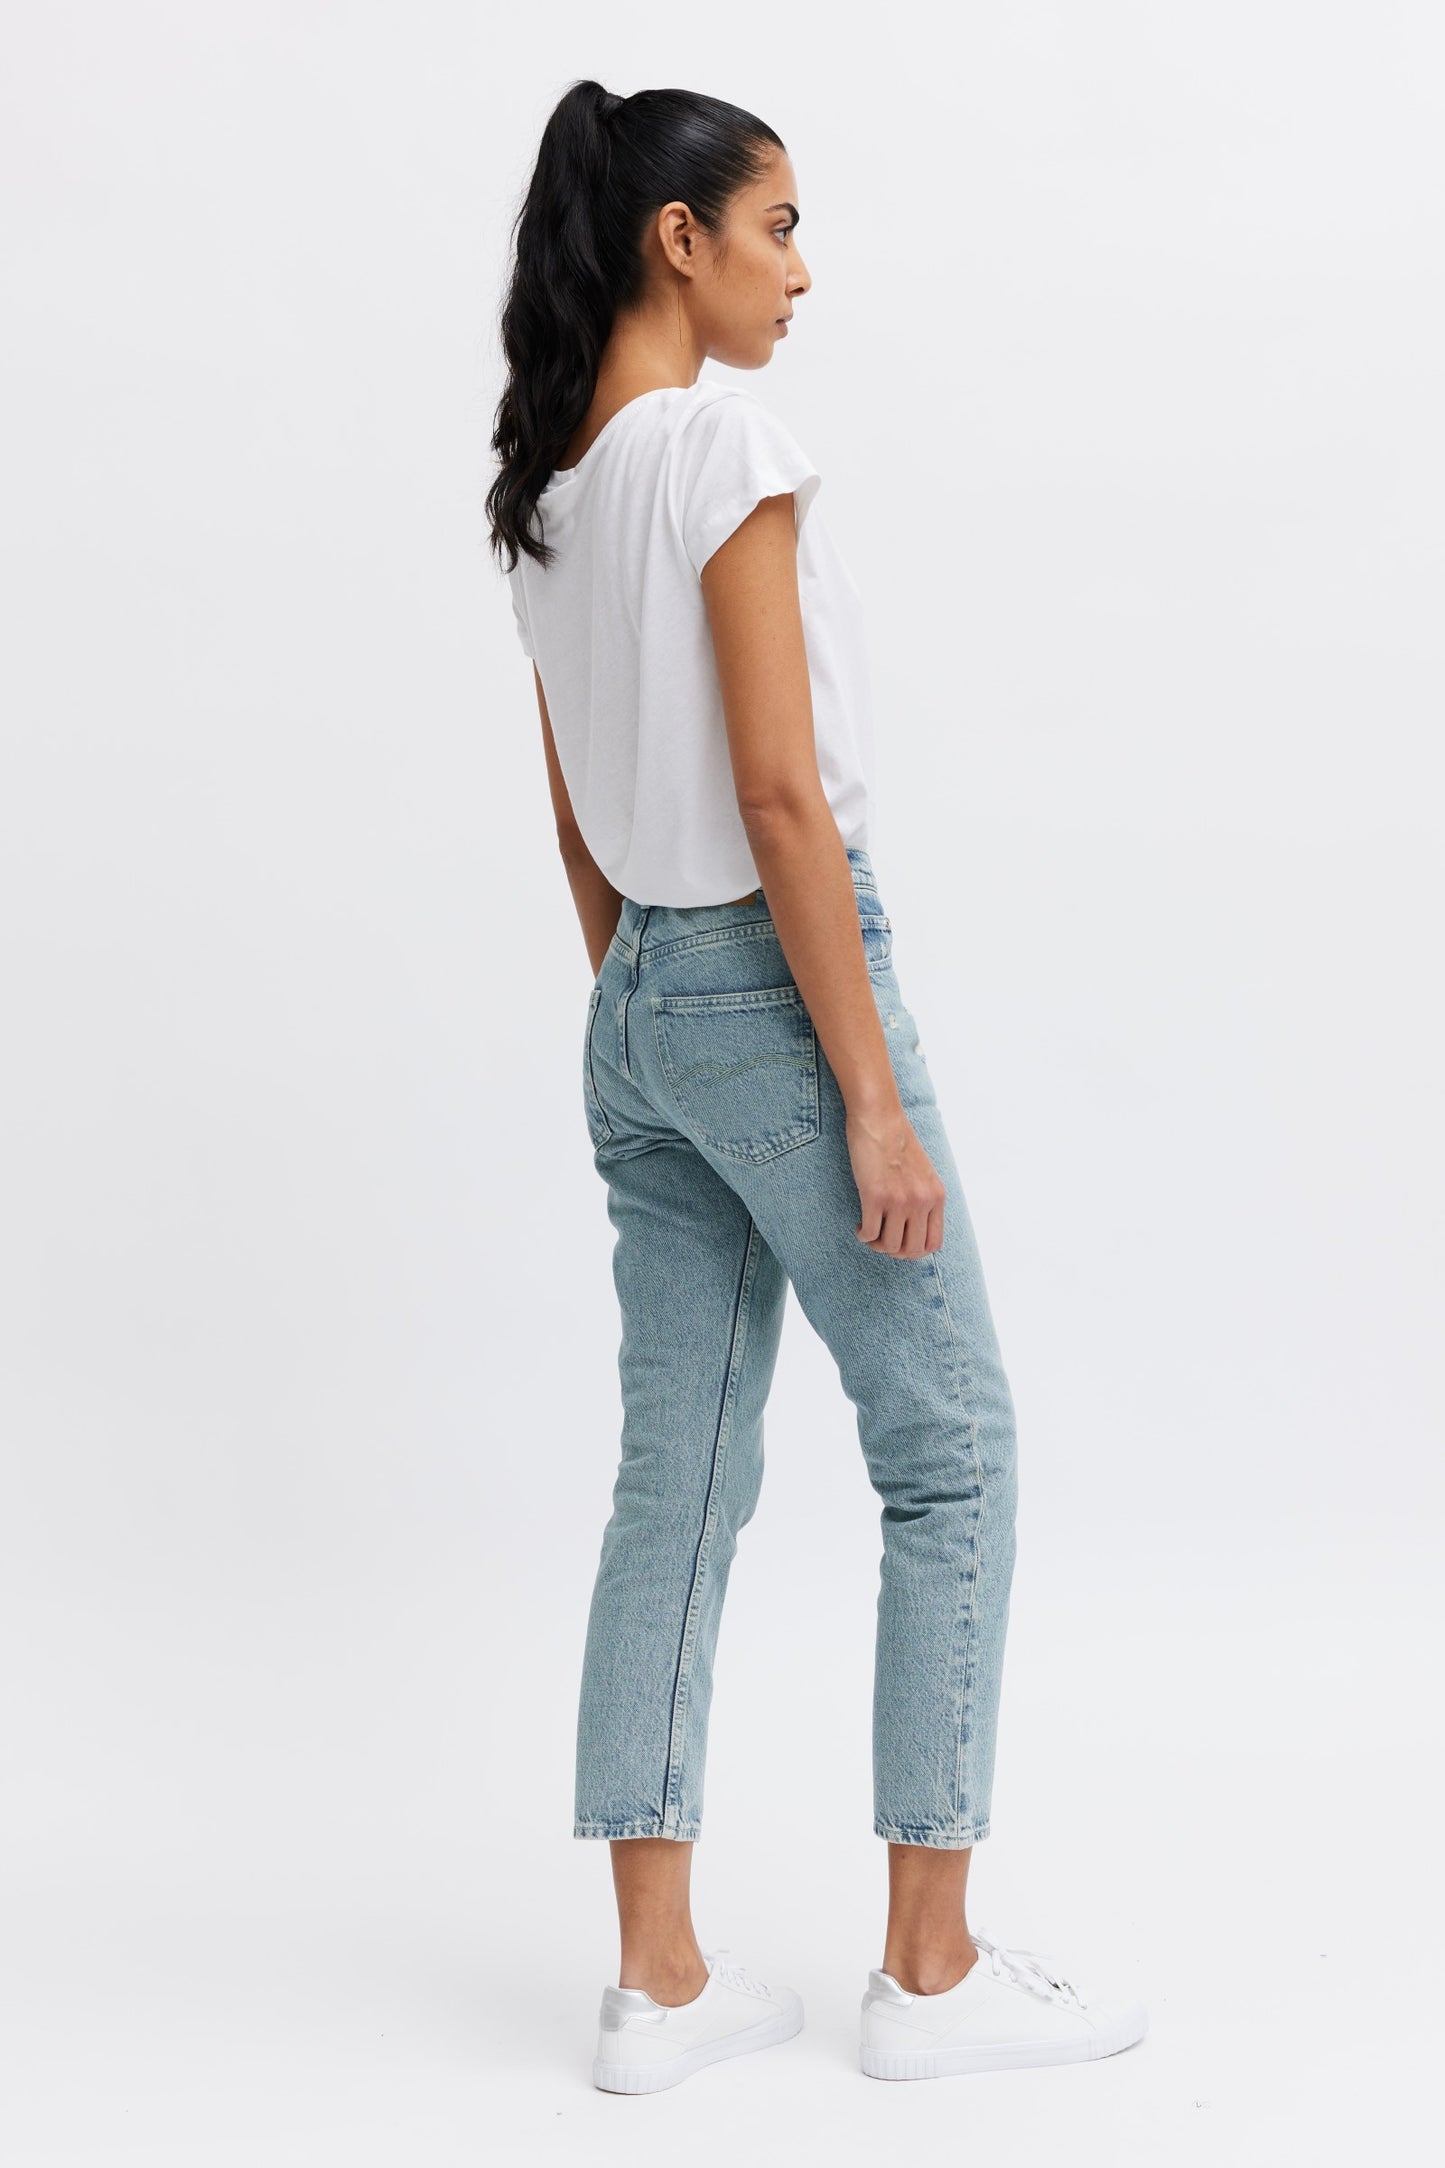 Cropped Leg Jeans for Women - Circular Organic Fashion